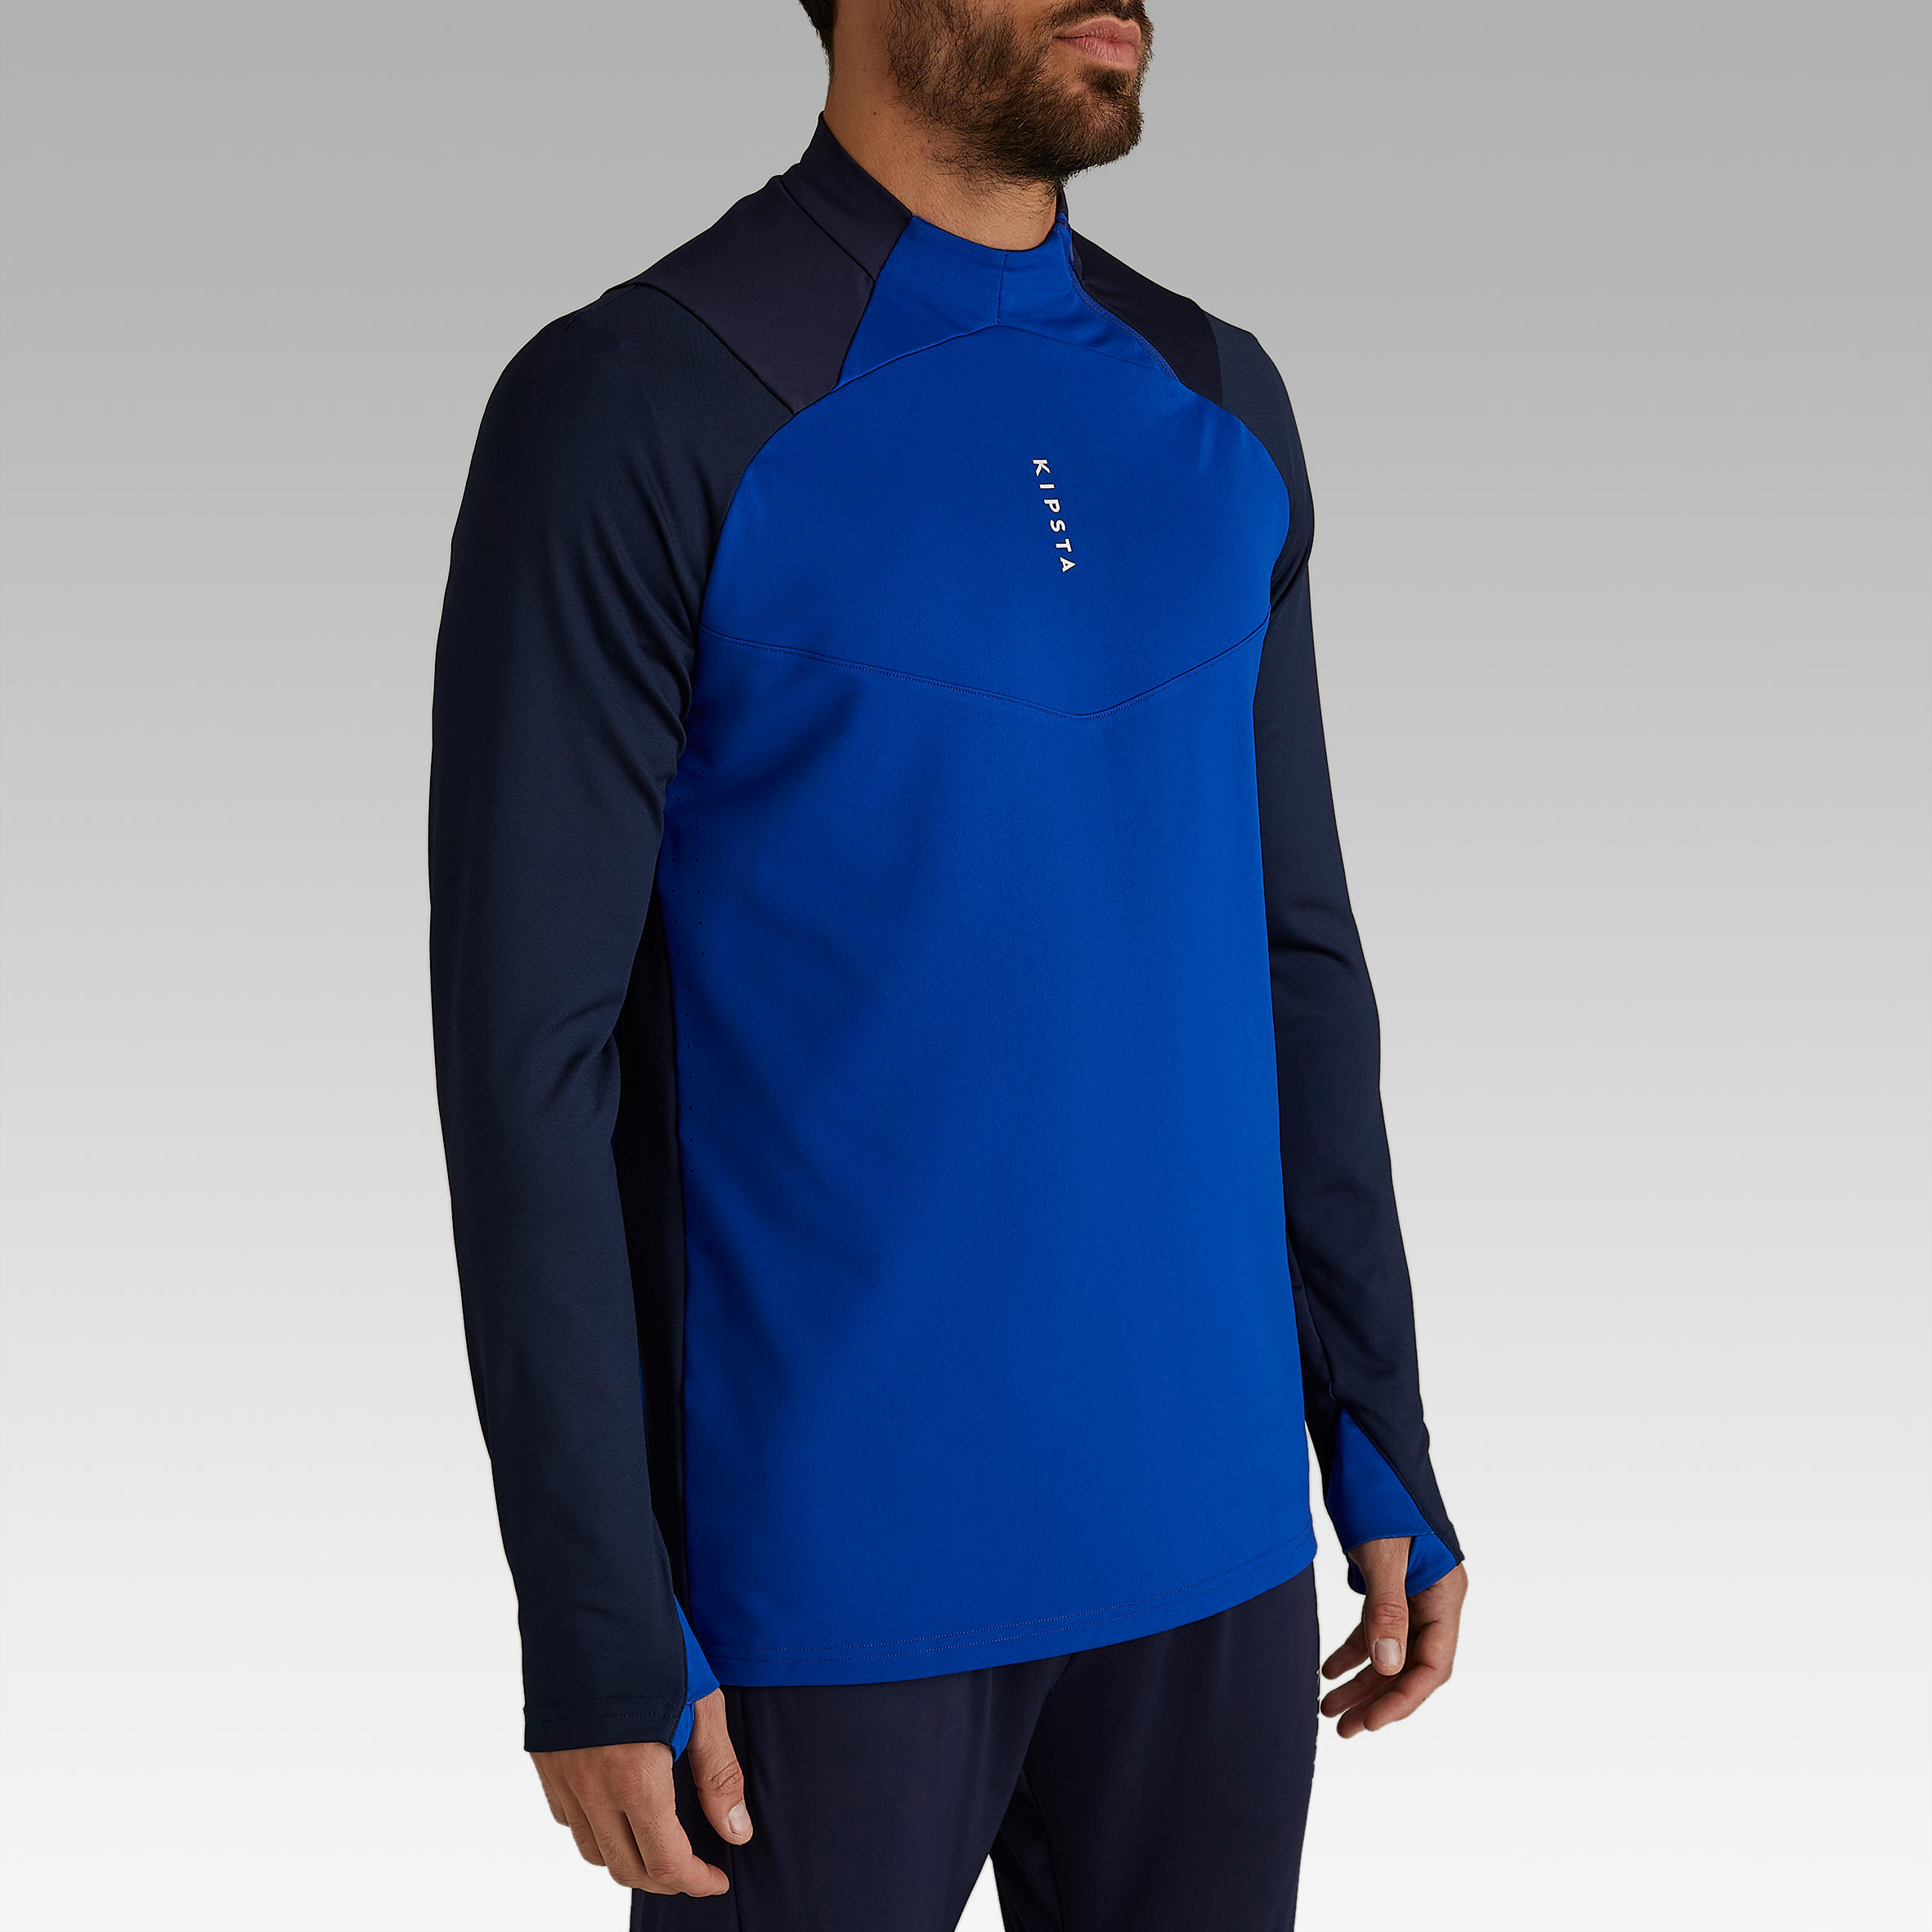 T500 Adult 1/2 Zip Football Sweatshirt - Blue 3/14